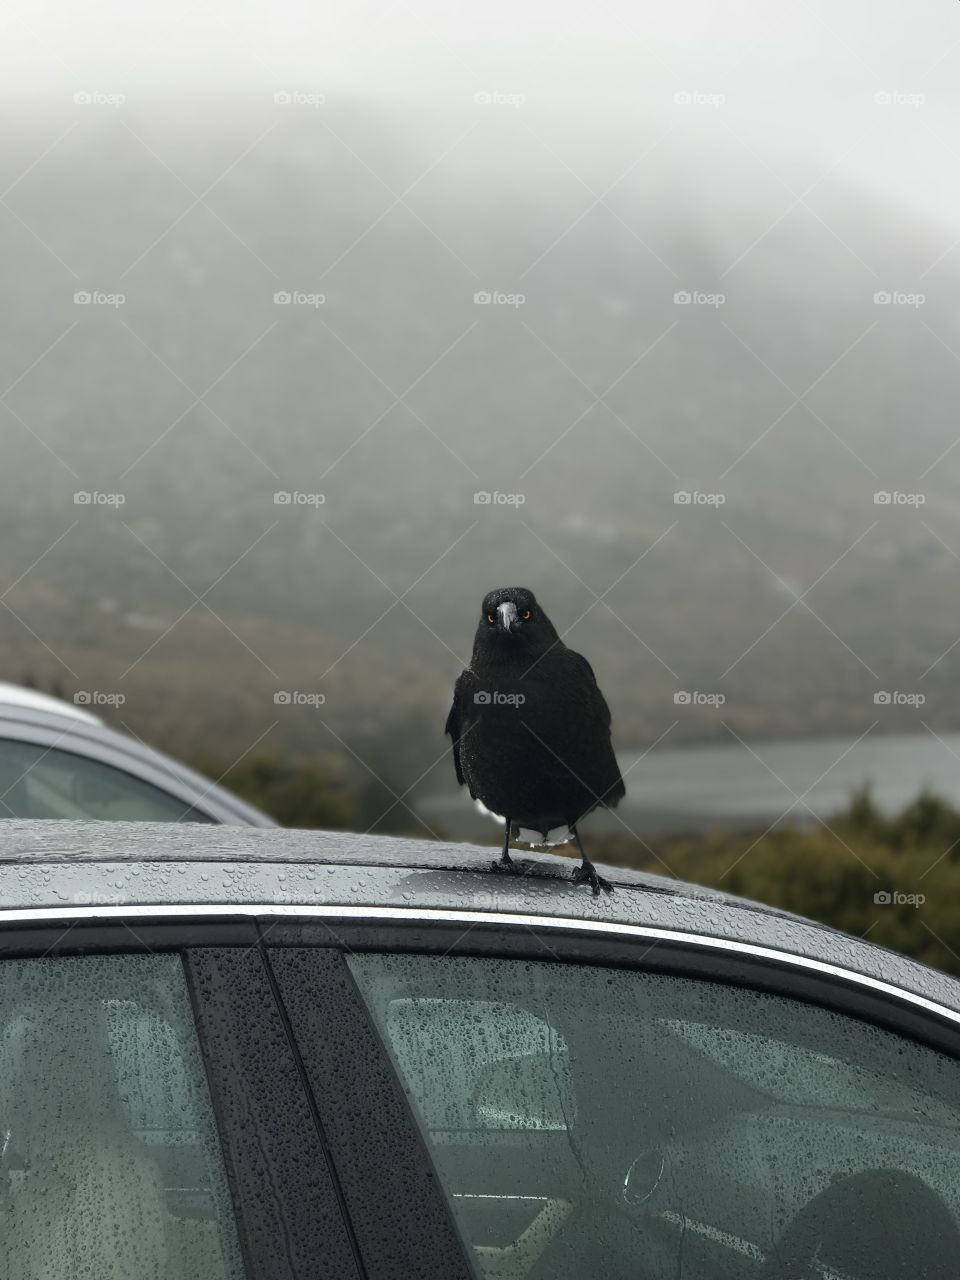 Black bird standing on a car